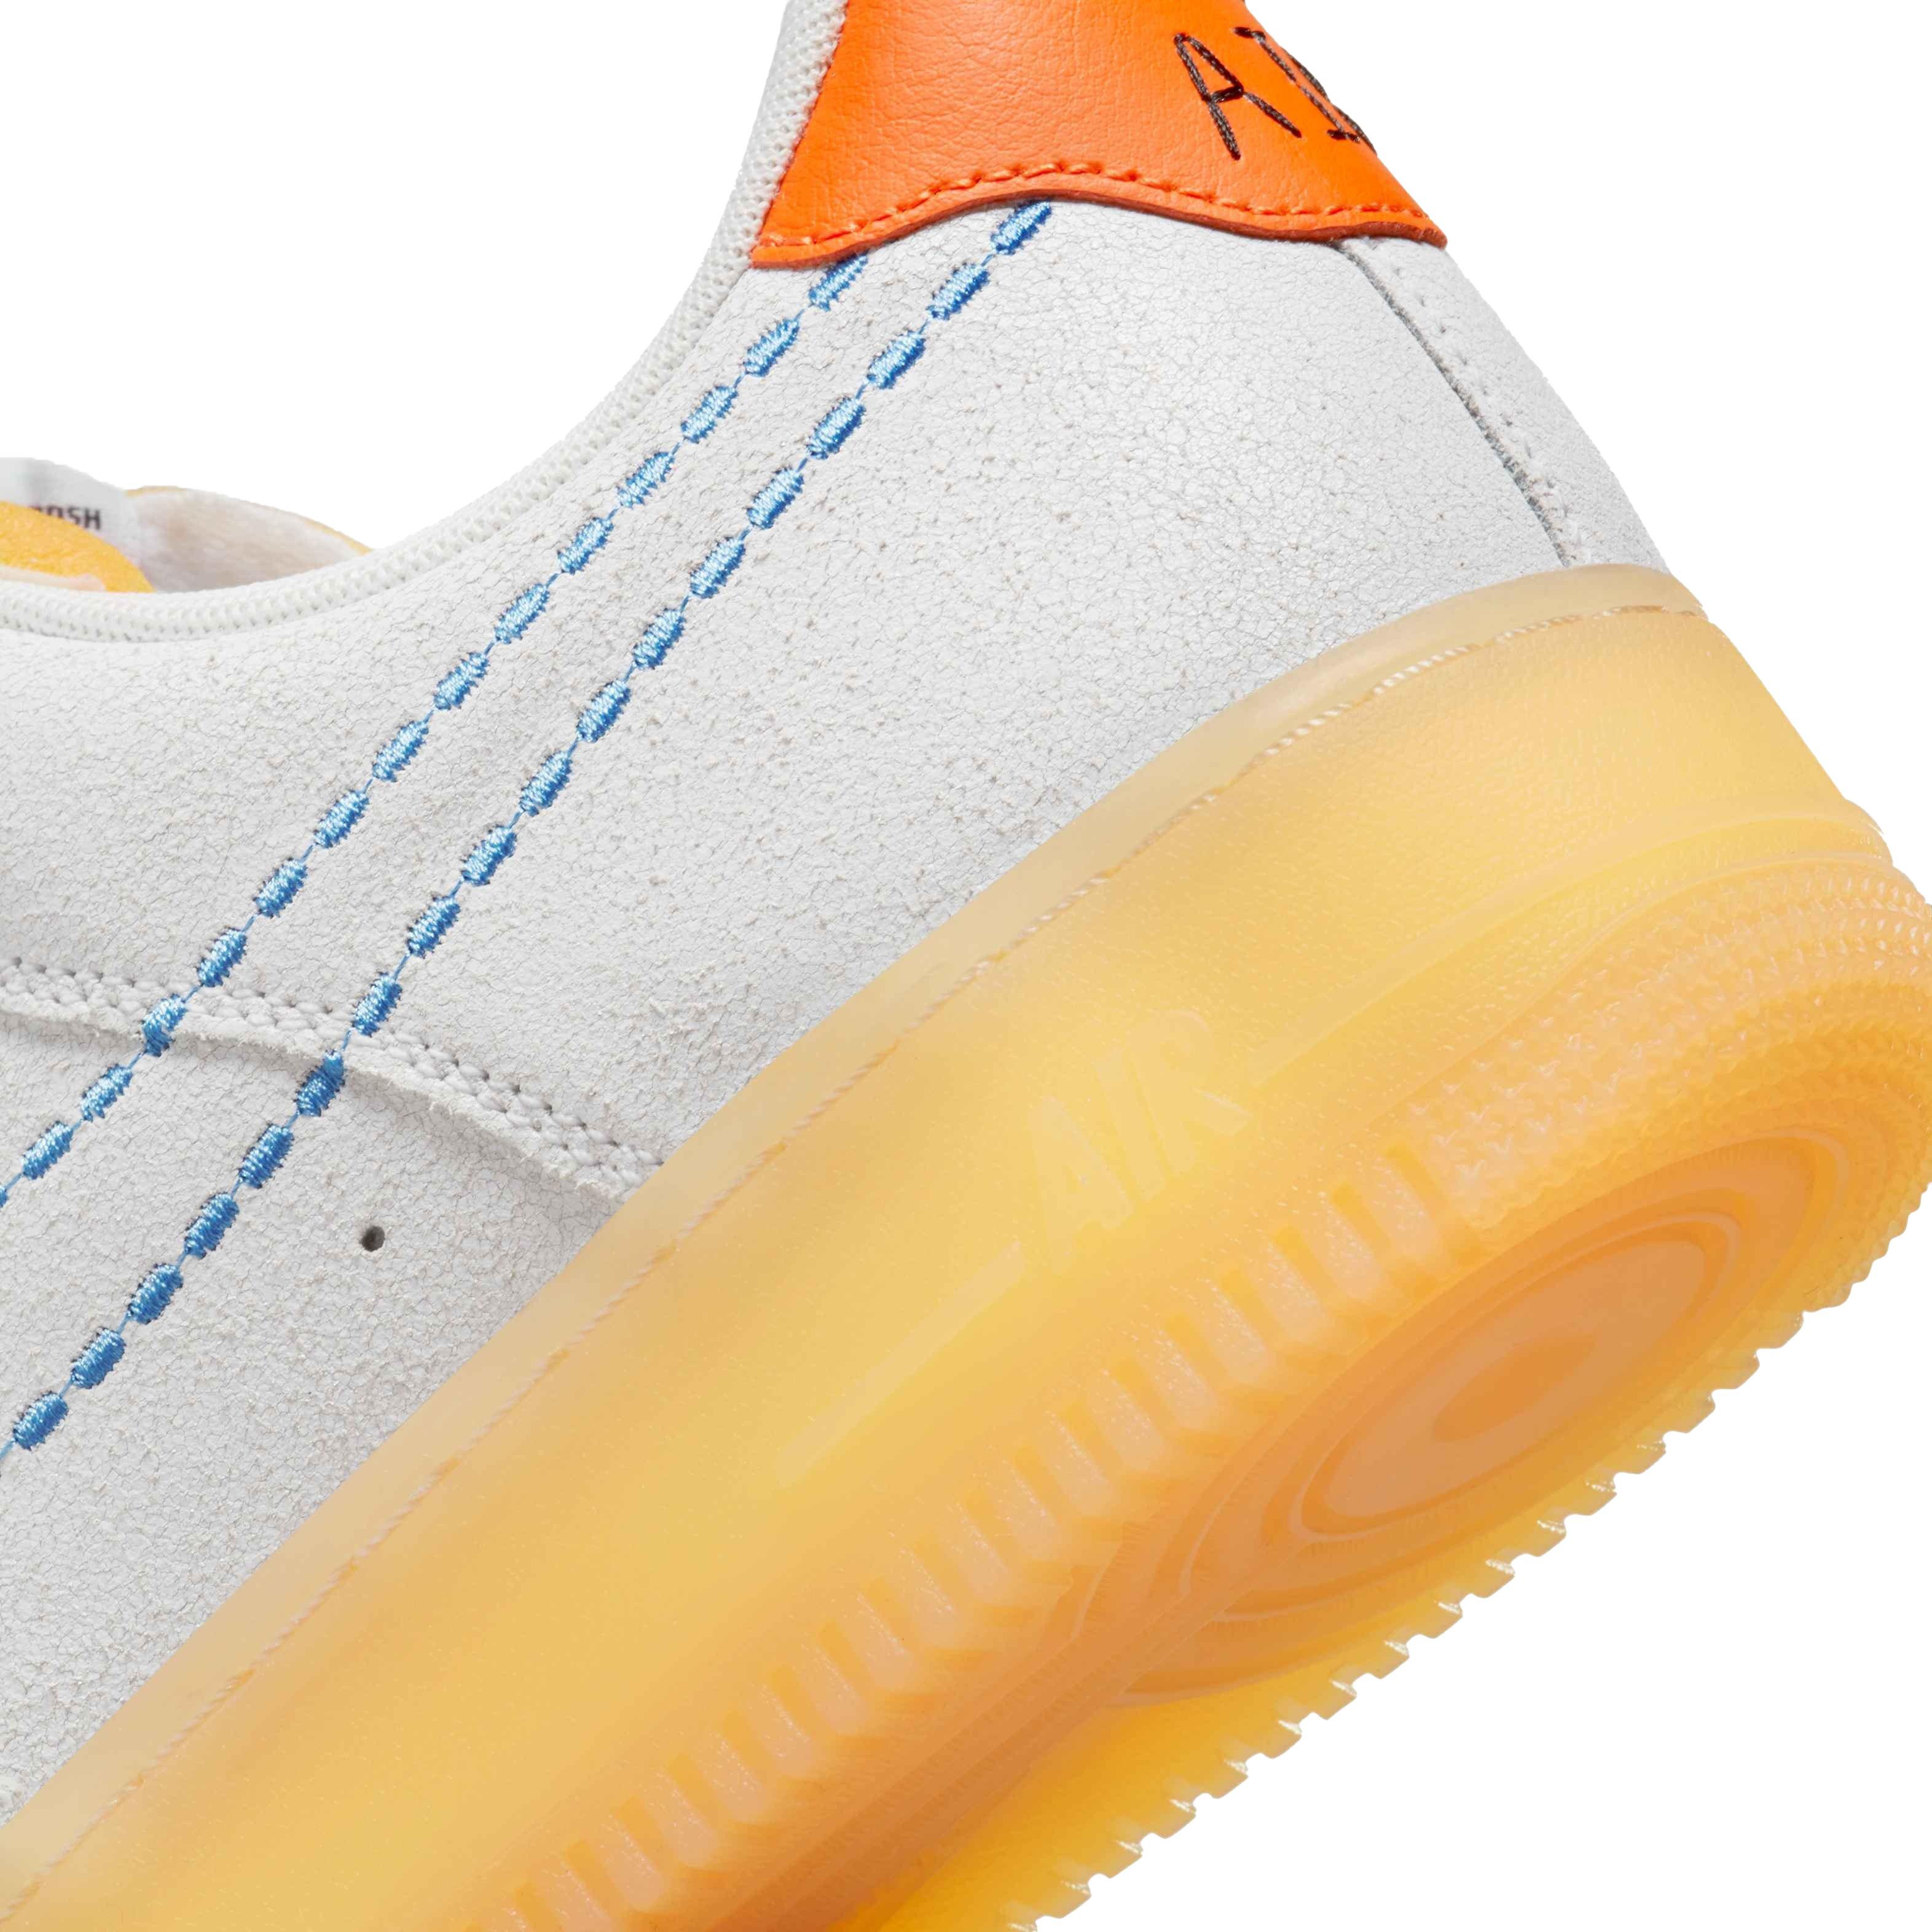 Nike Air Force 1 `07 LV8 - White / University Blue / Safety Orange – Kith